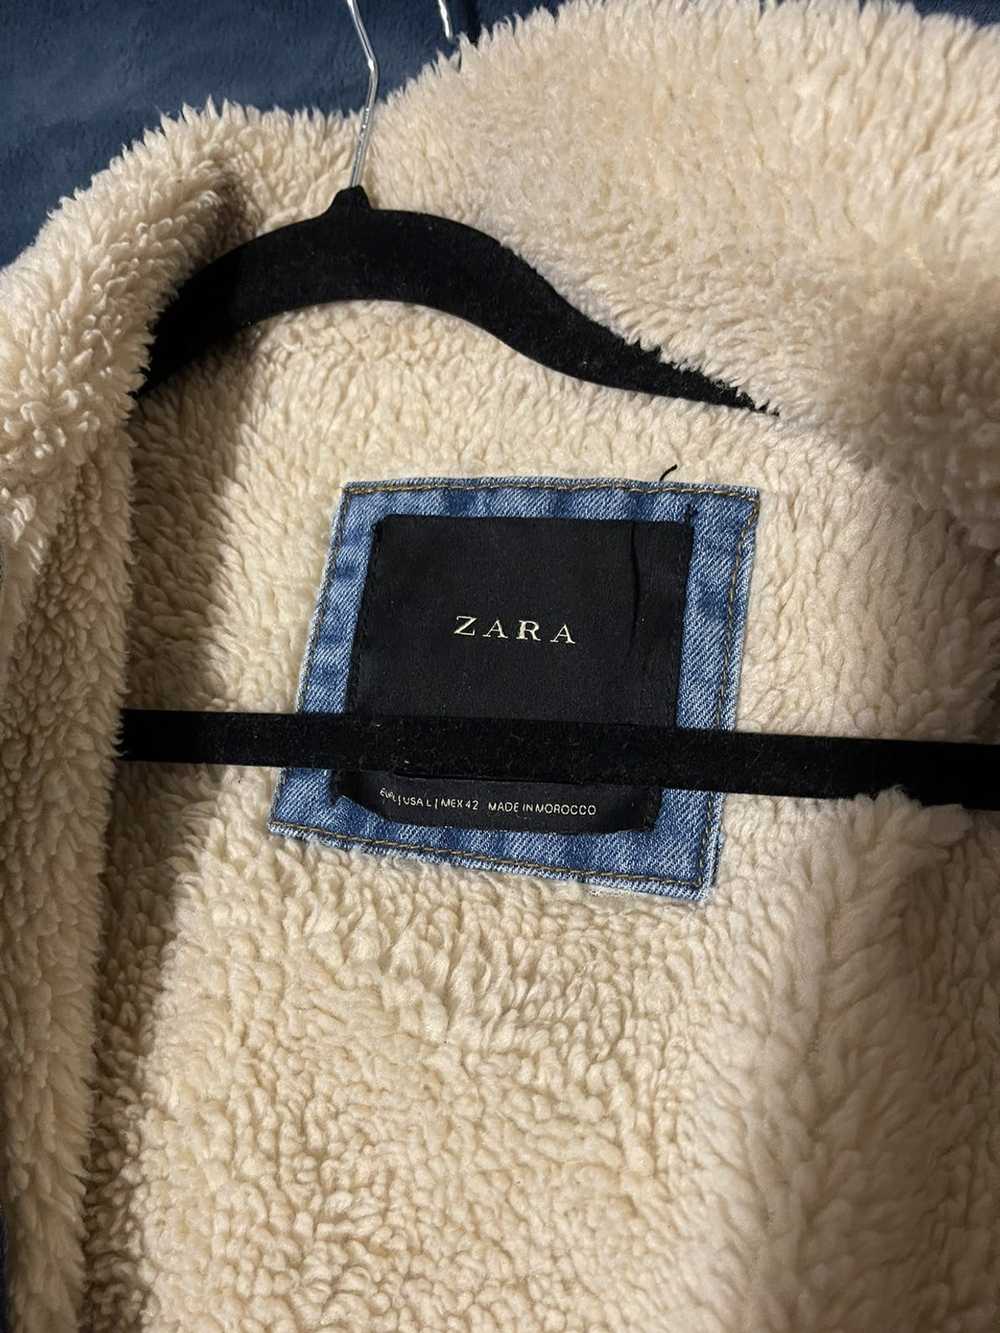 Zara Zara Denim Sherpa Jacket Size Large - image 3